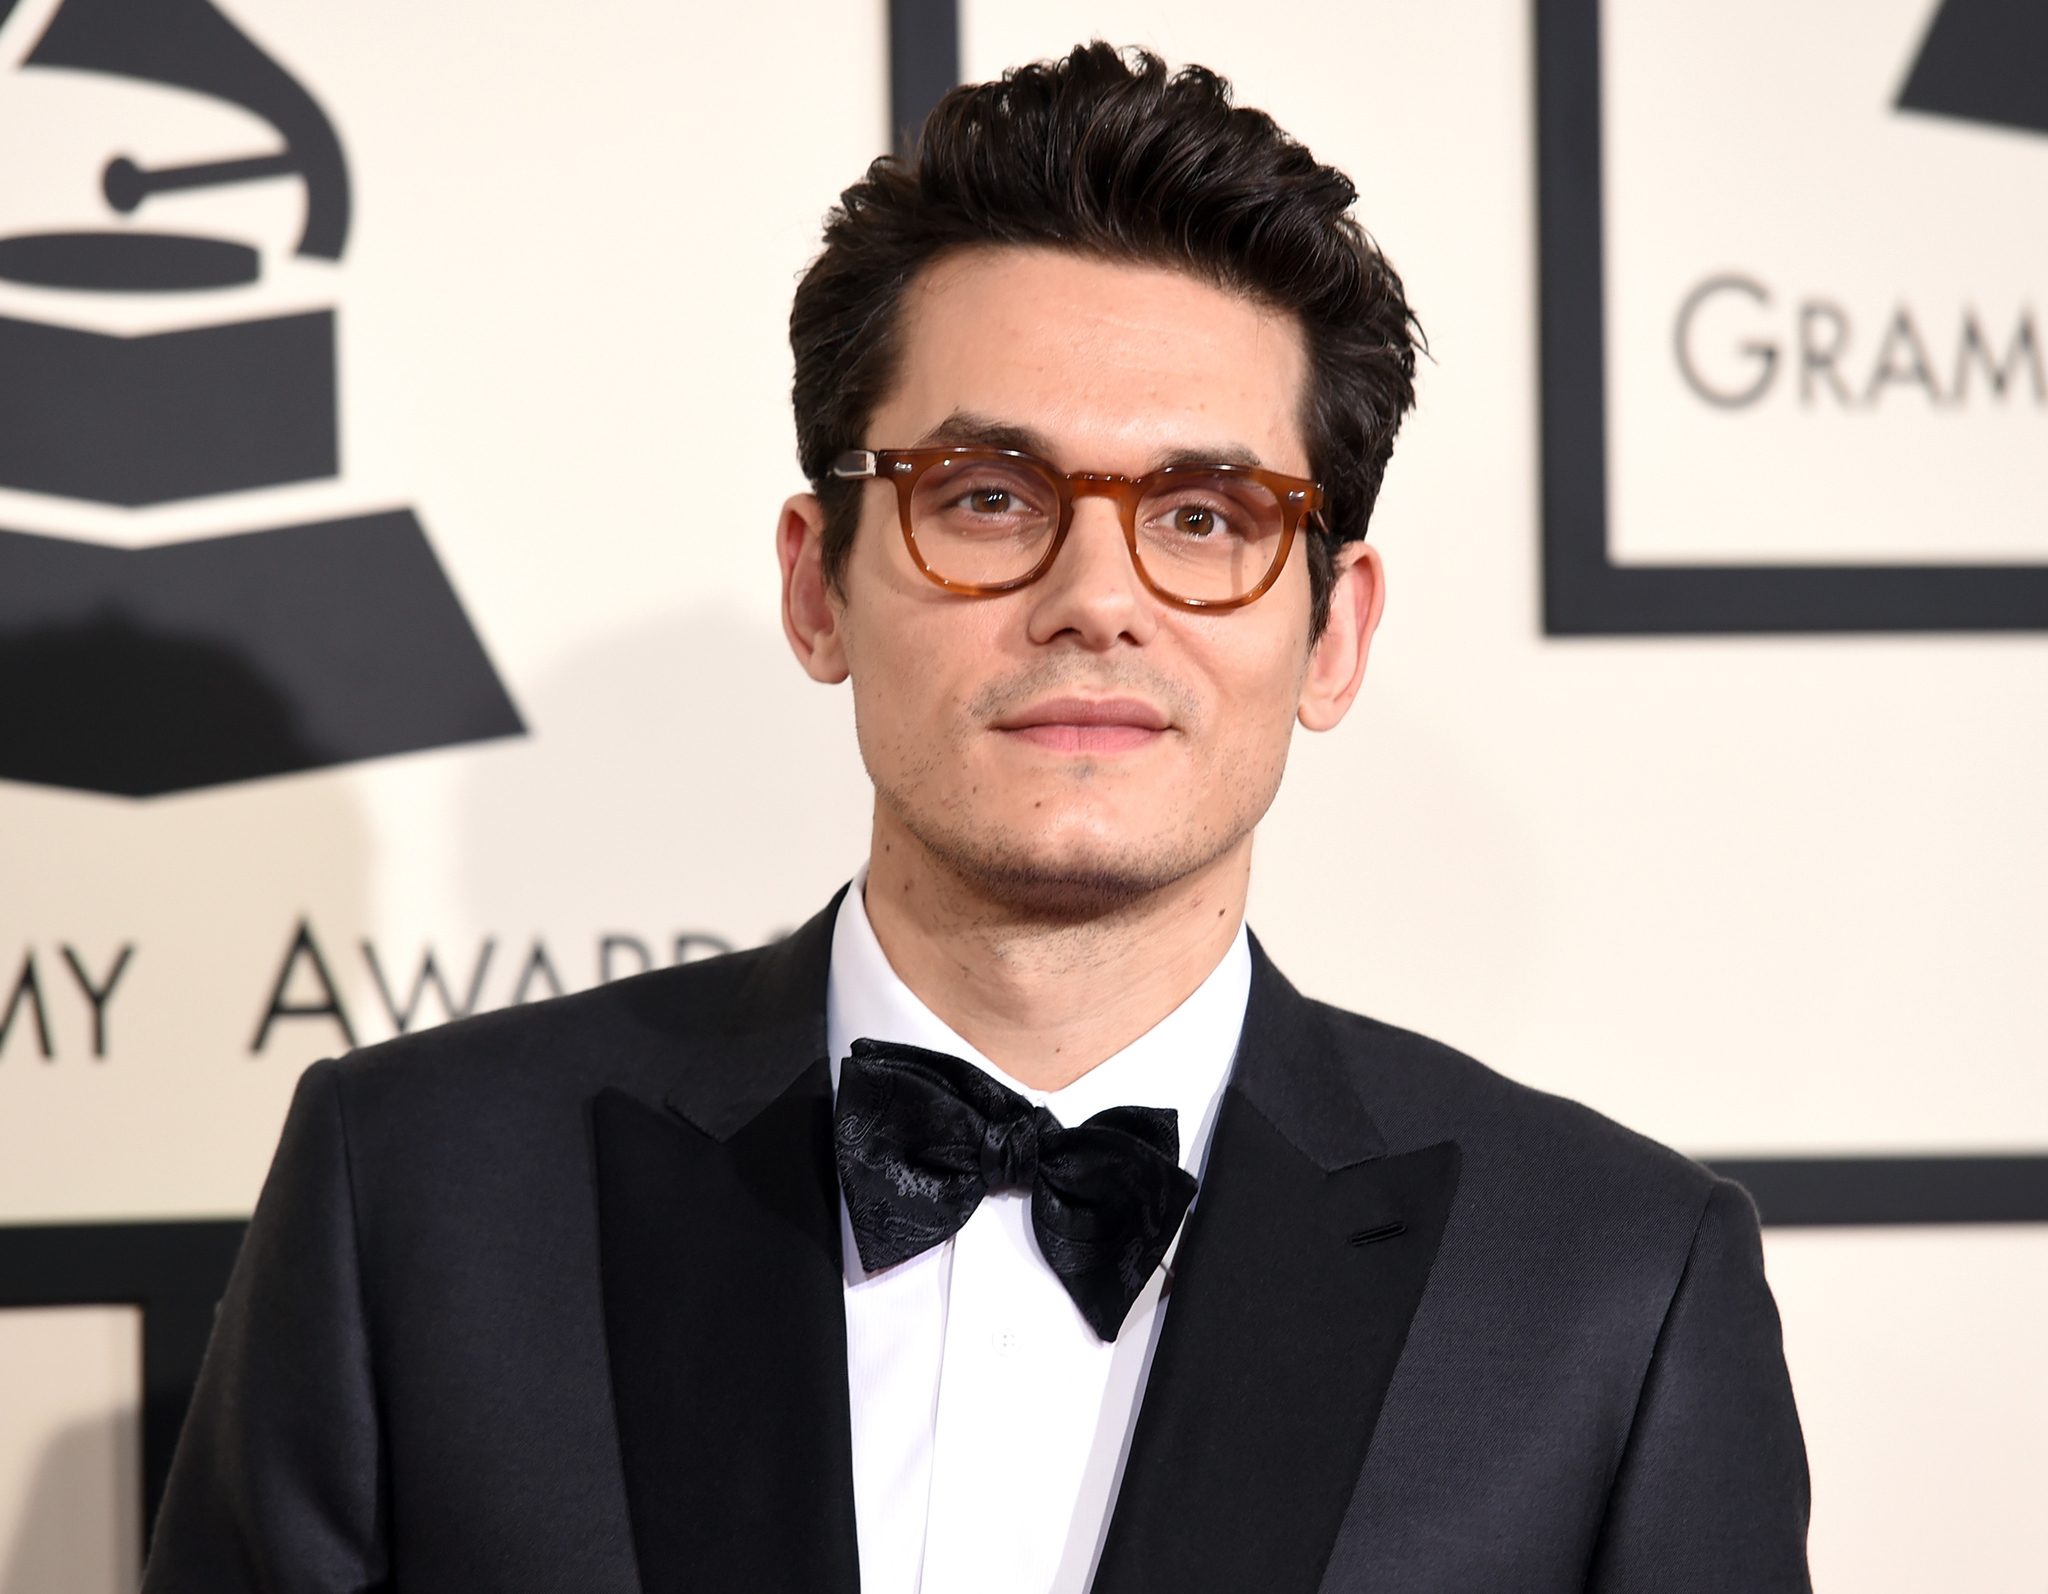 John Mayer in The 57th Annual Grammy Awards (2015)